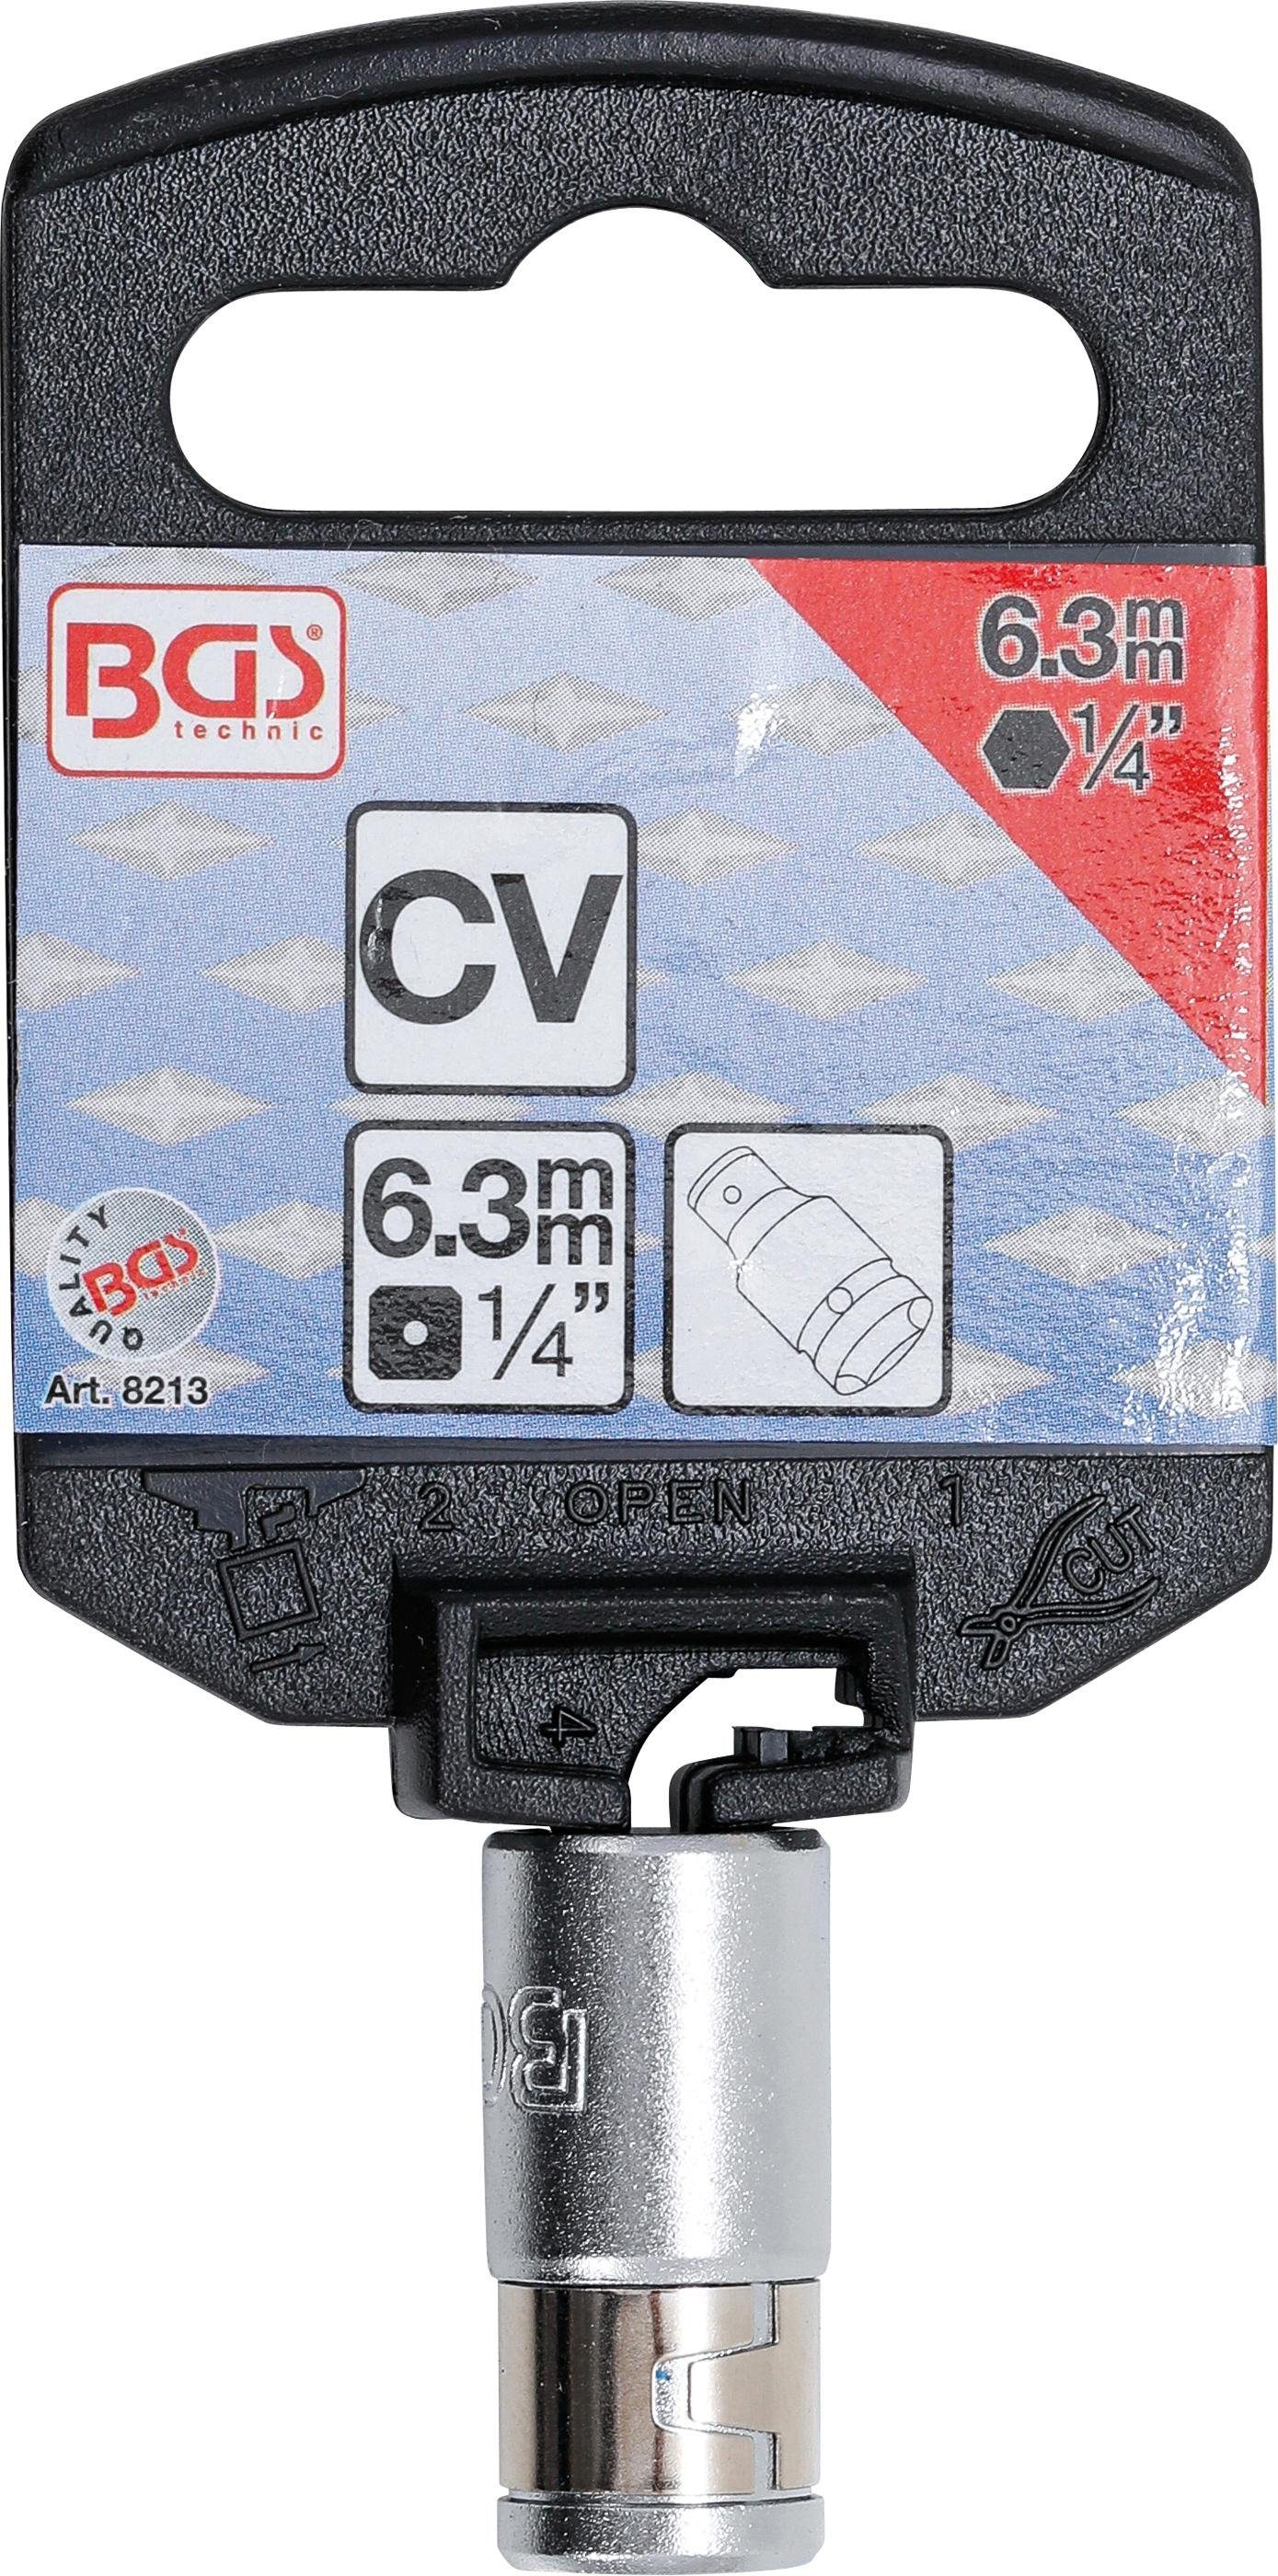 BGS technic mm (1/4) Bit-Schraubendreher mit mm 6,3 Innenvierkant 6,3 Haltekugel, Bit-Adapter Innensechskant (1/4)